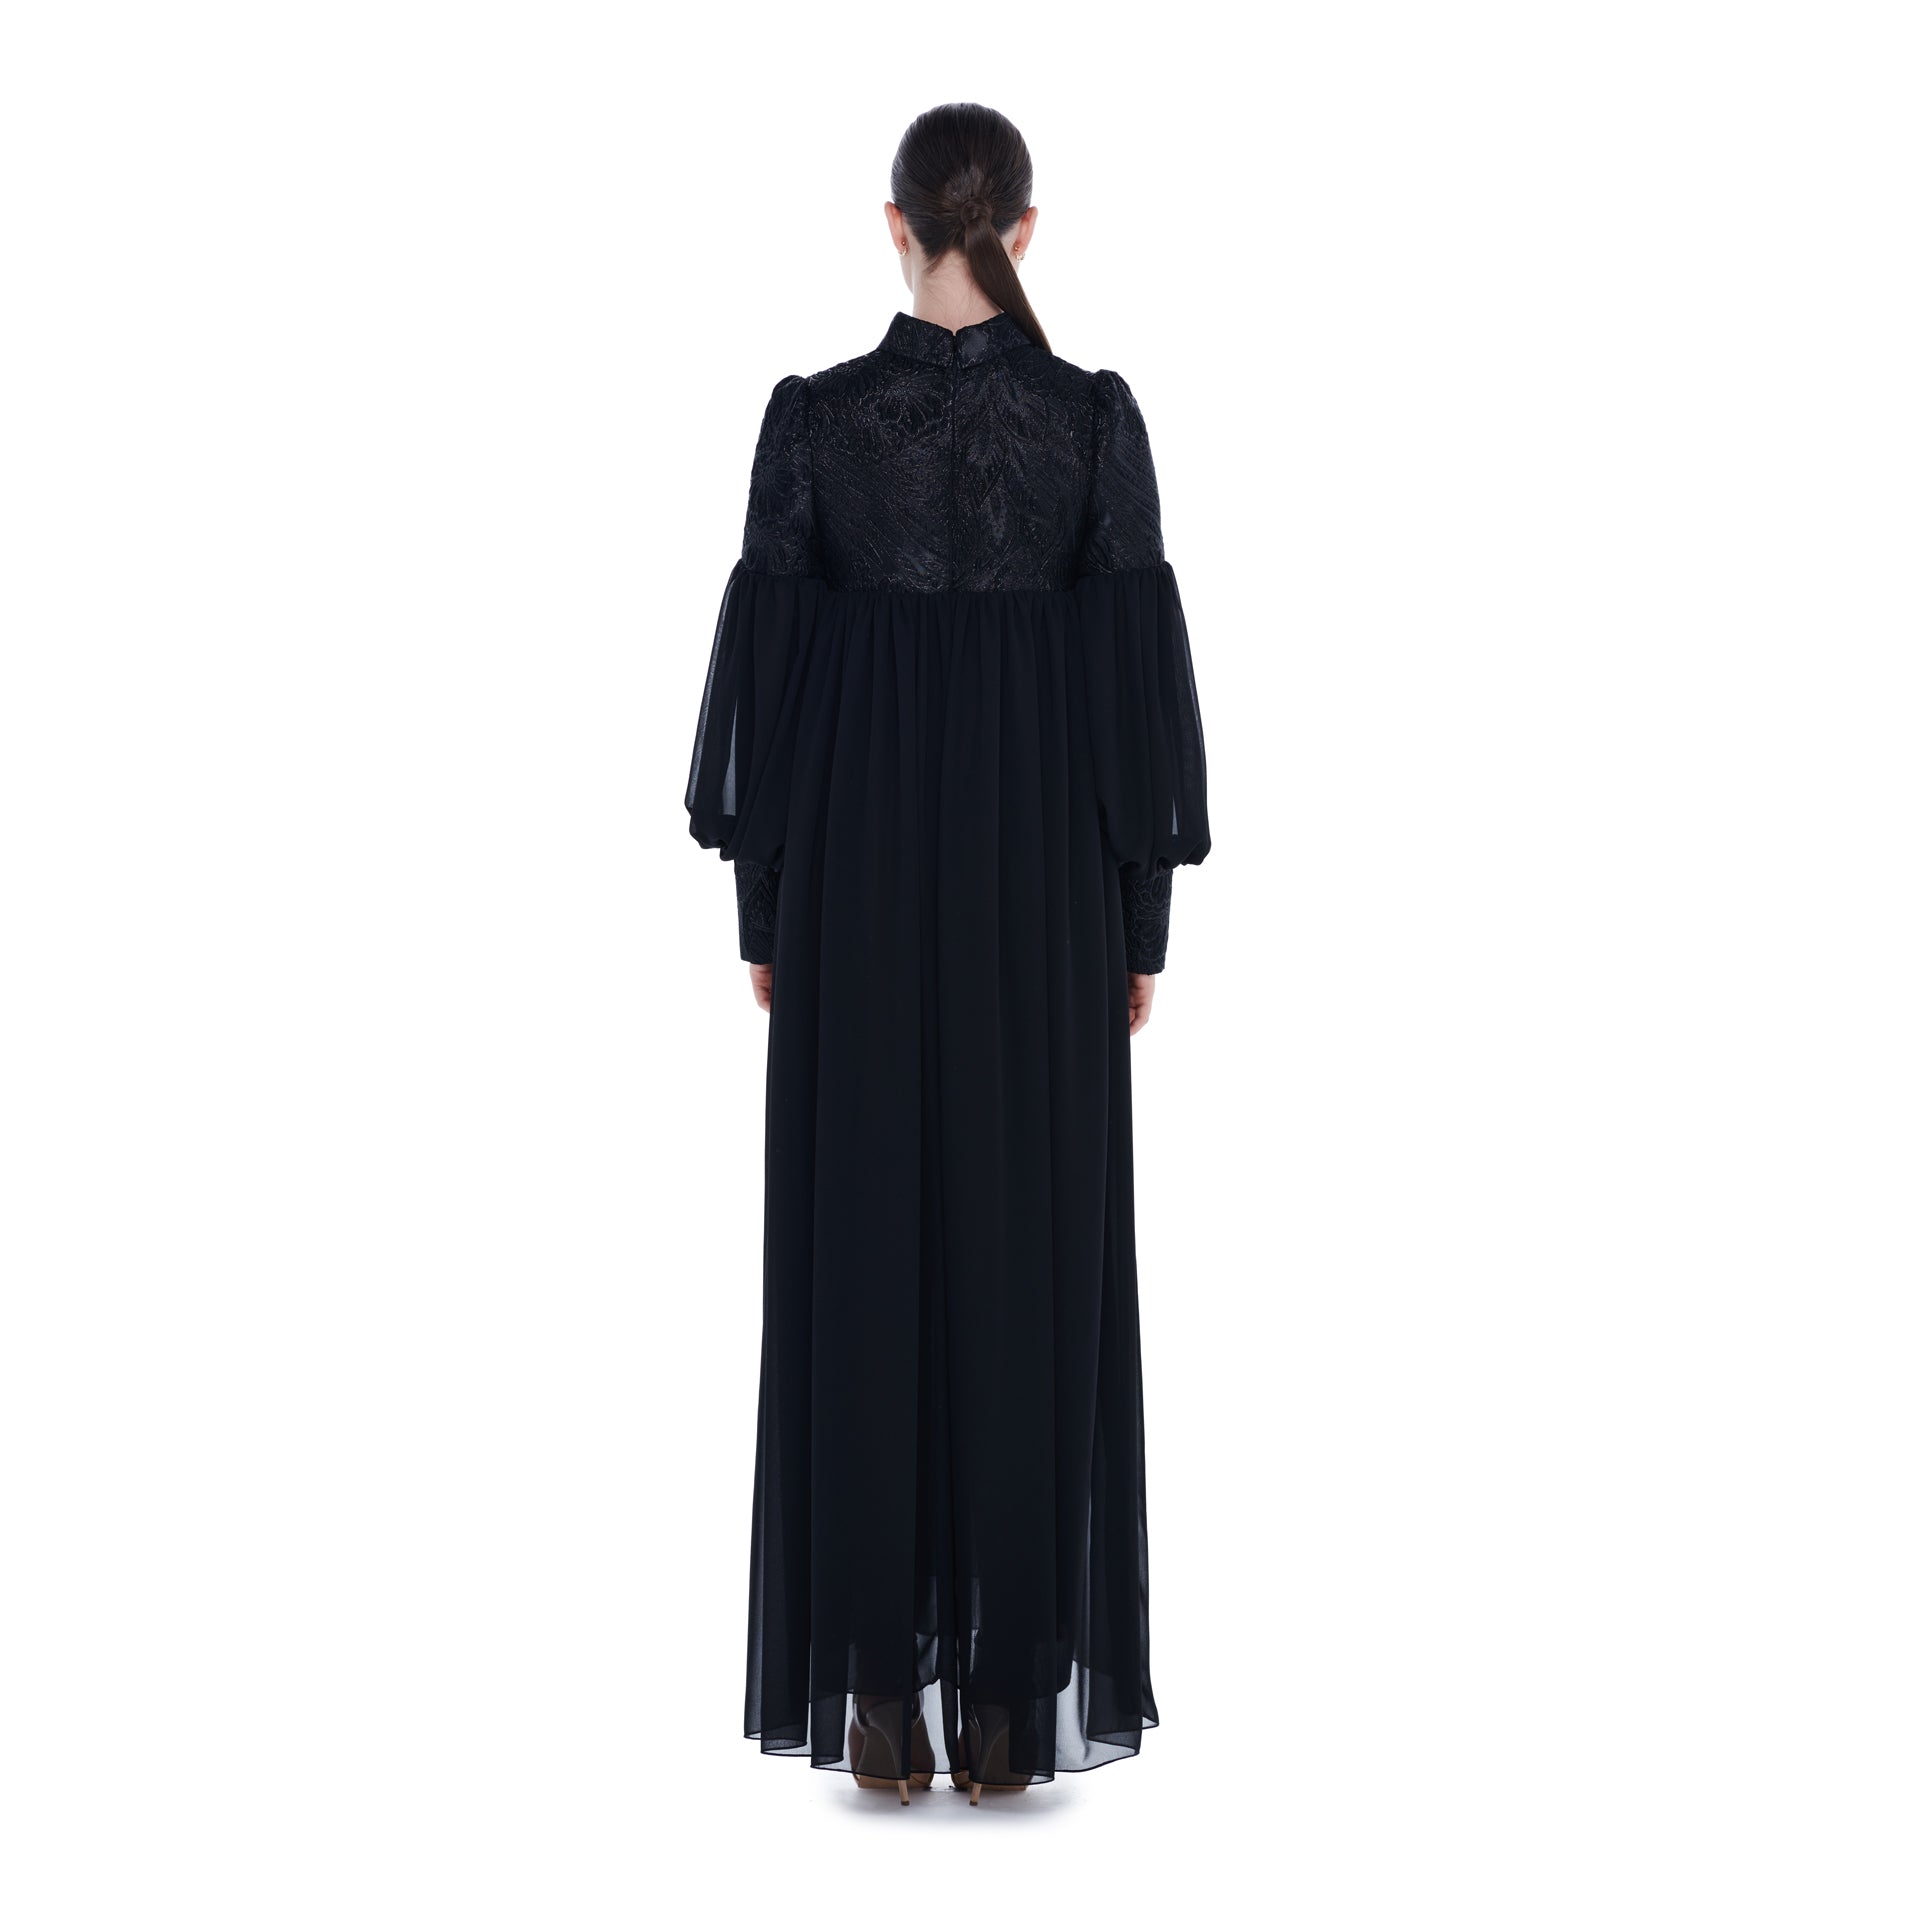 Black Formal Chiffon Dress From Miha